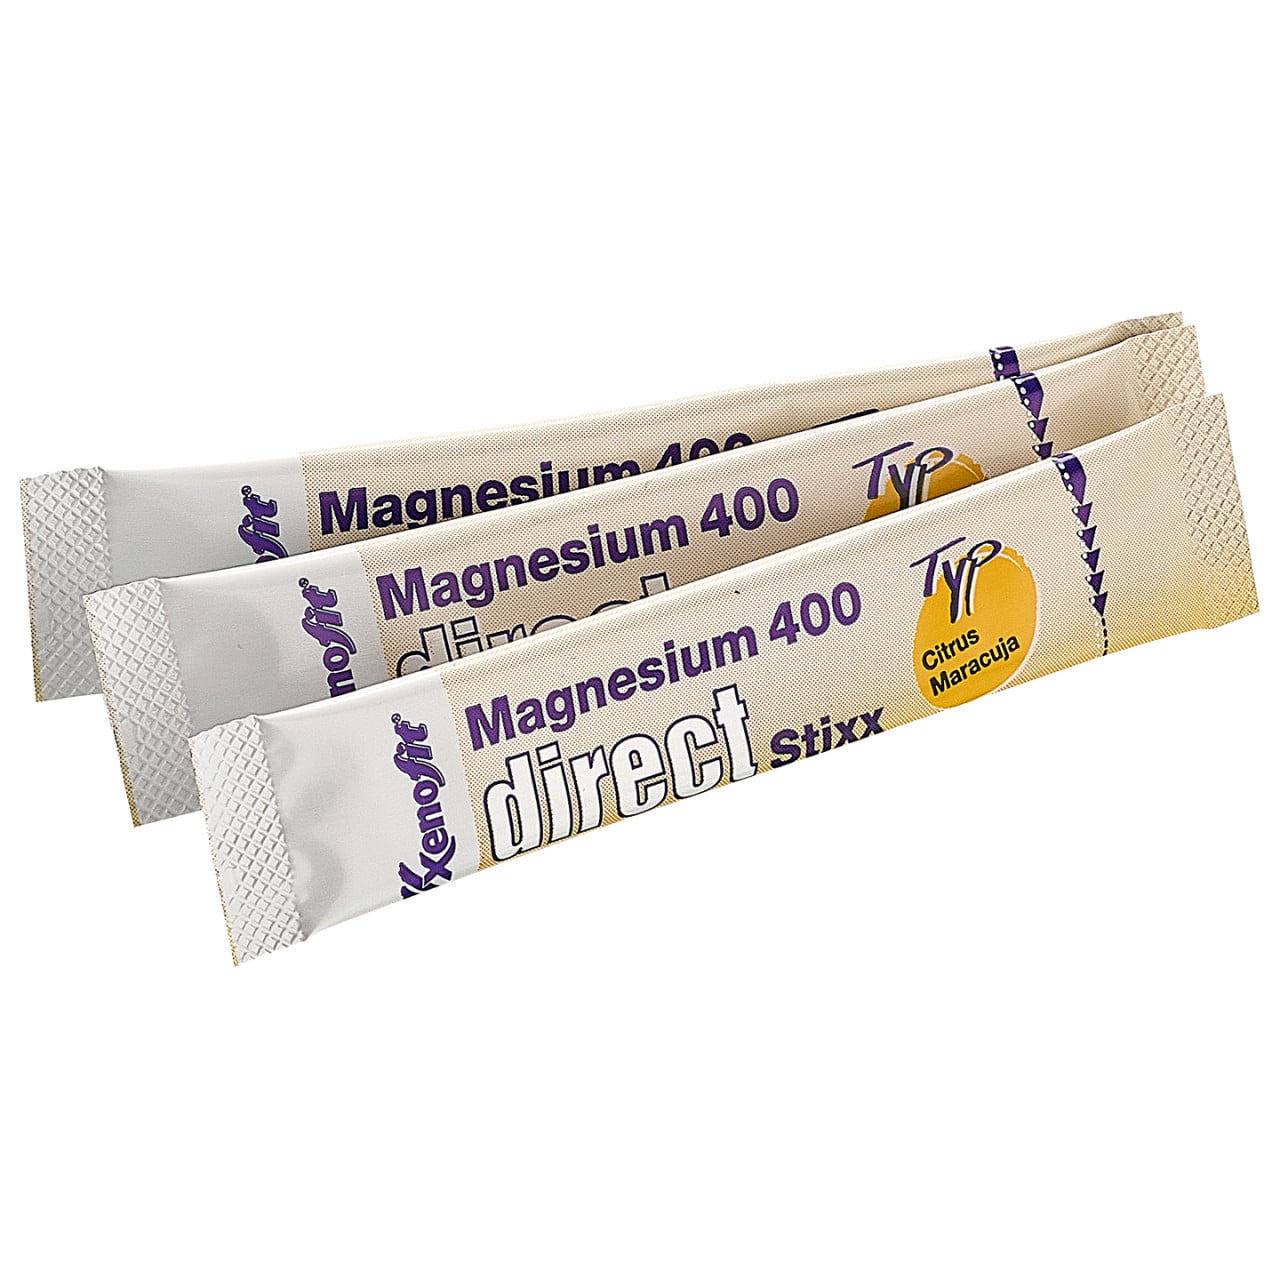 Magnesium 400 direct Stixx (25 Portionsbeutel)